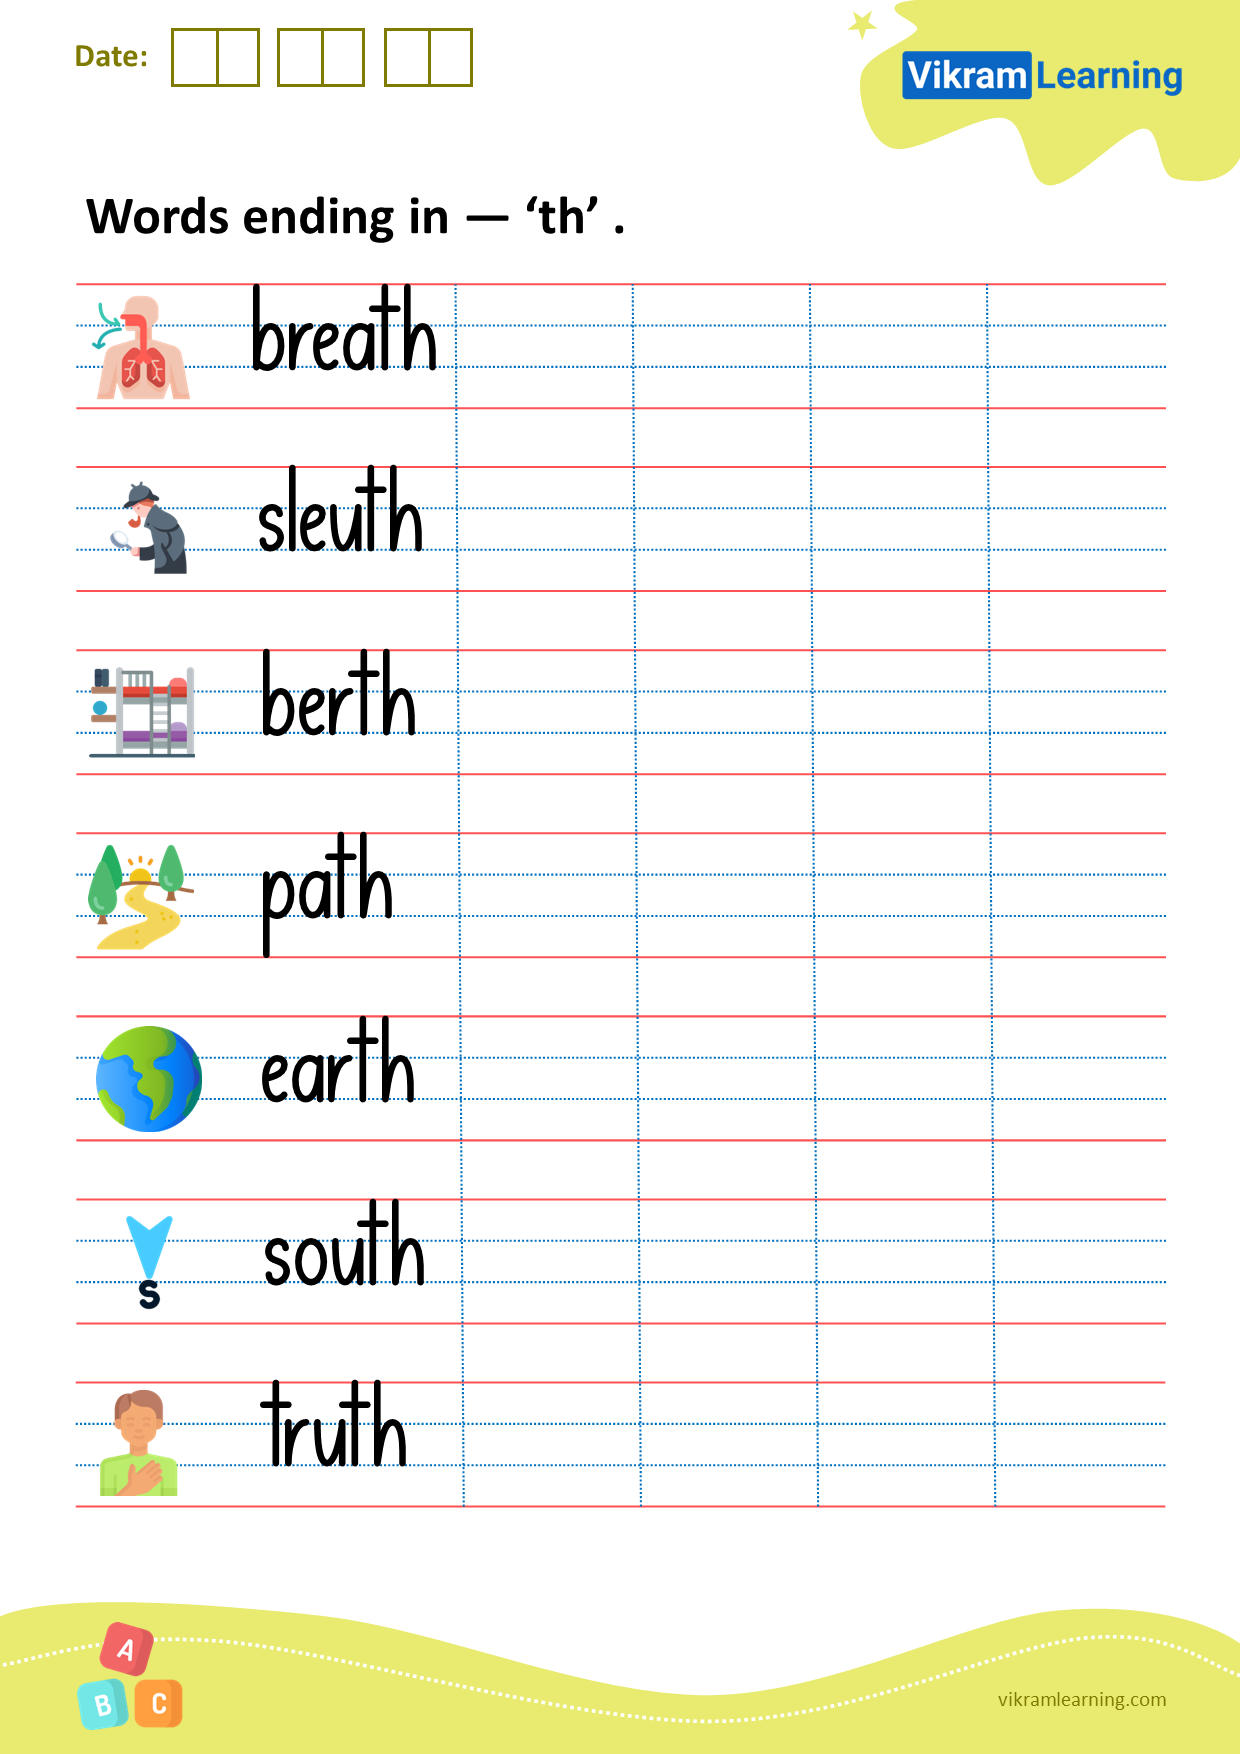 Download words ending in — ‘th’ worksheets